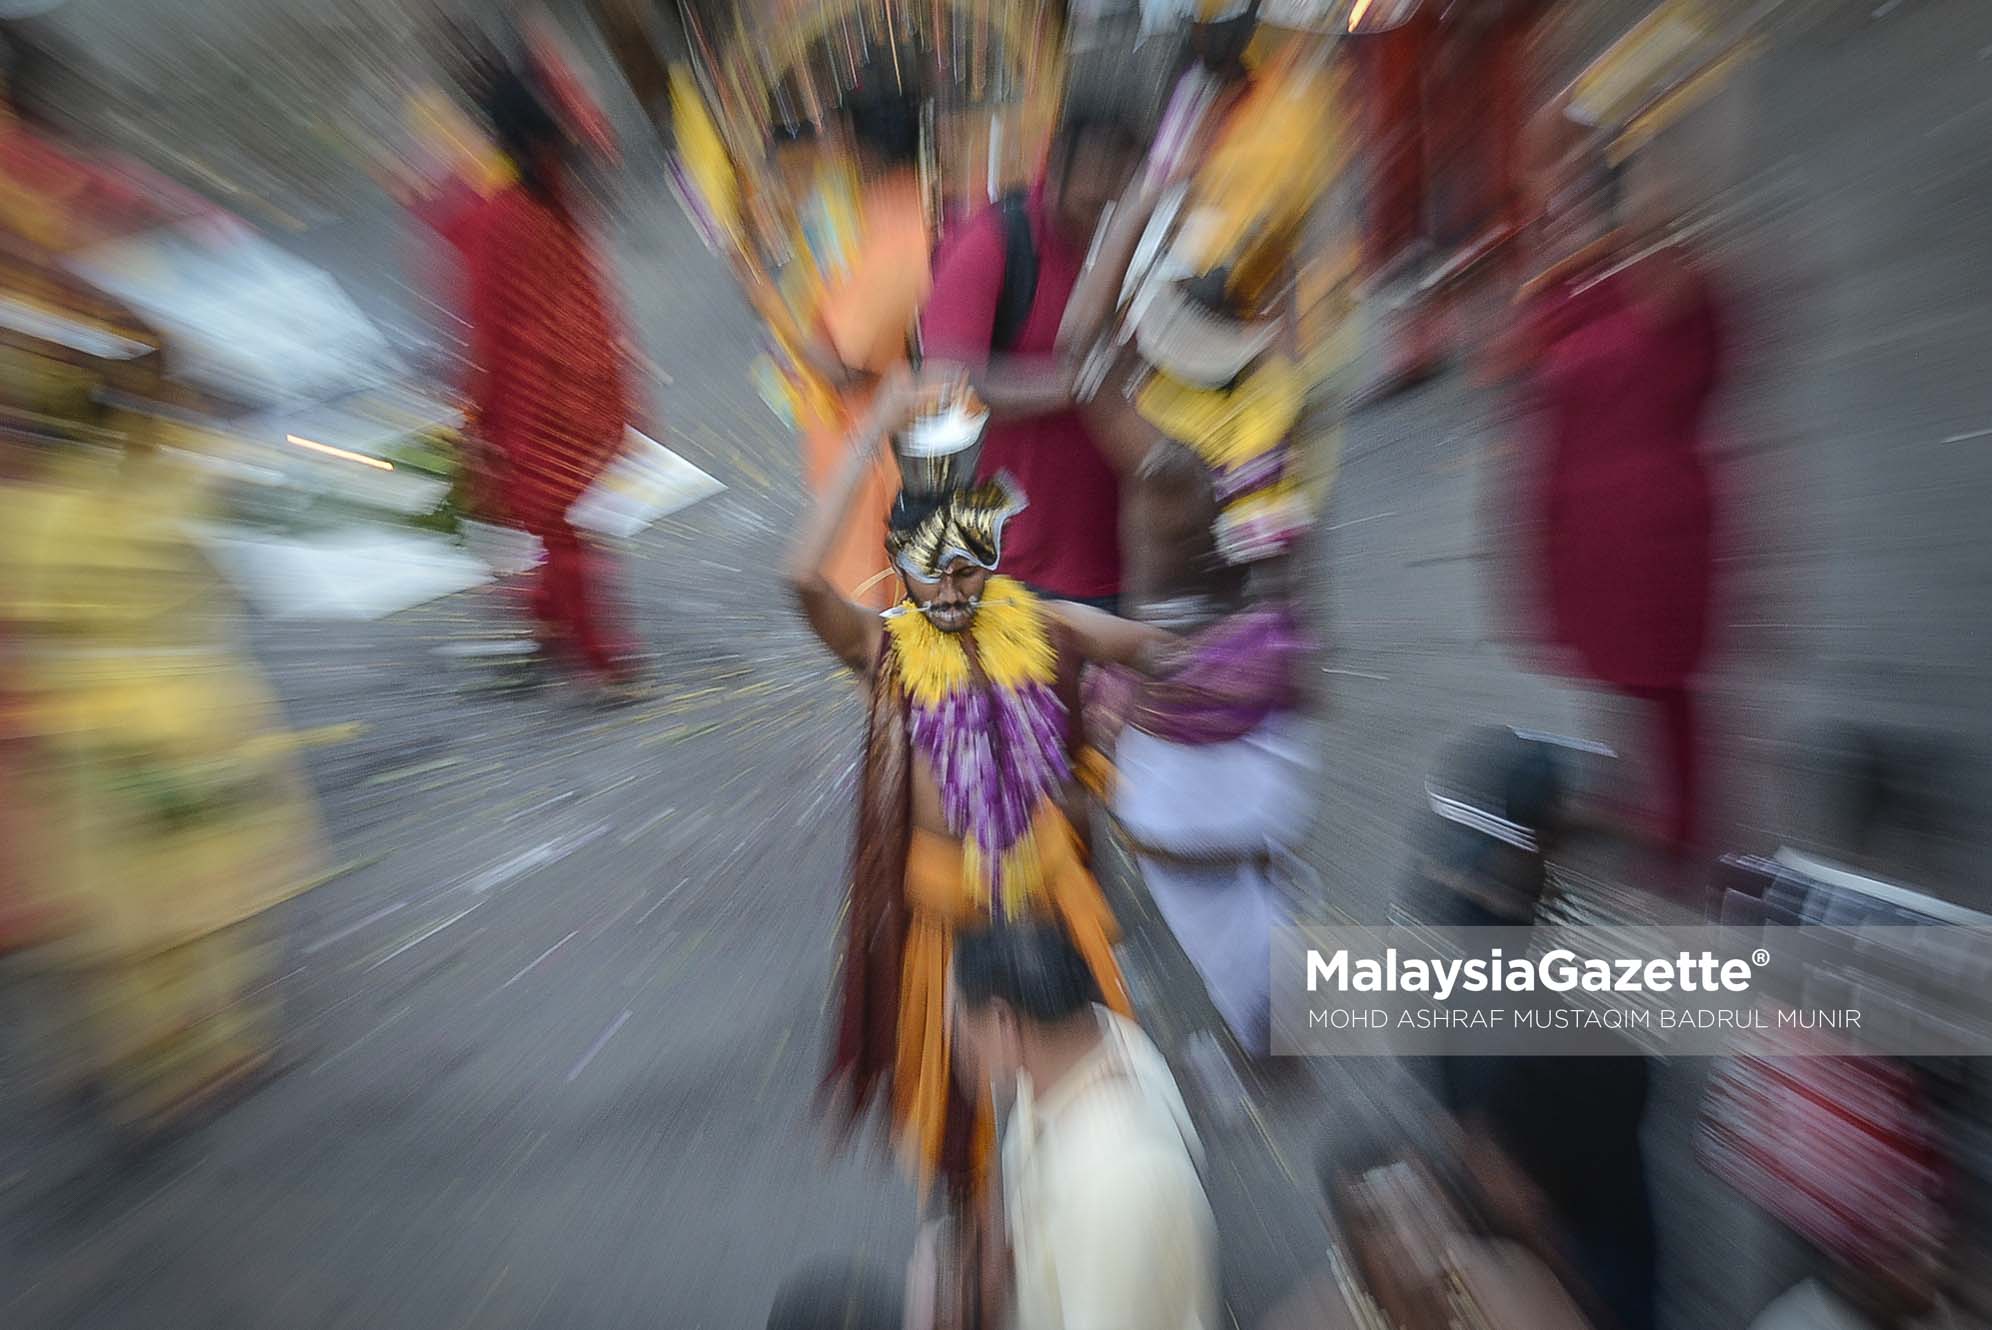 Seorang lelaki penganut agama Hindu menjunjung susu ketika tinjauan lensa Malaysia Gazette sempena sambutan Thaipusam 2017 di Batu Caves, Selangor. foto ASHRAF MUSTAQIM BADRUL MUNIR, 08 FEBRUARI 2017.